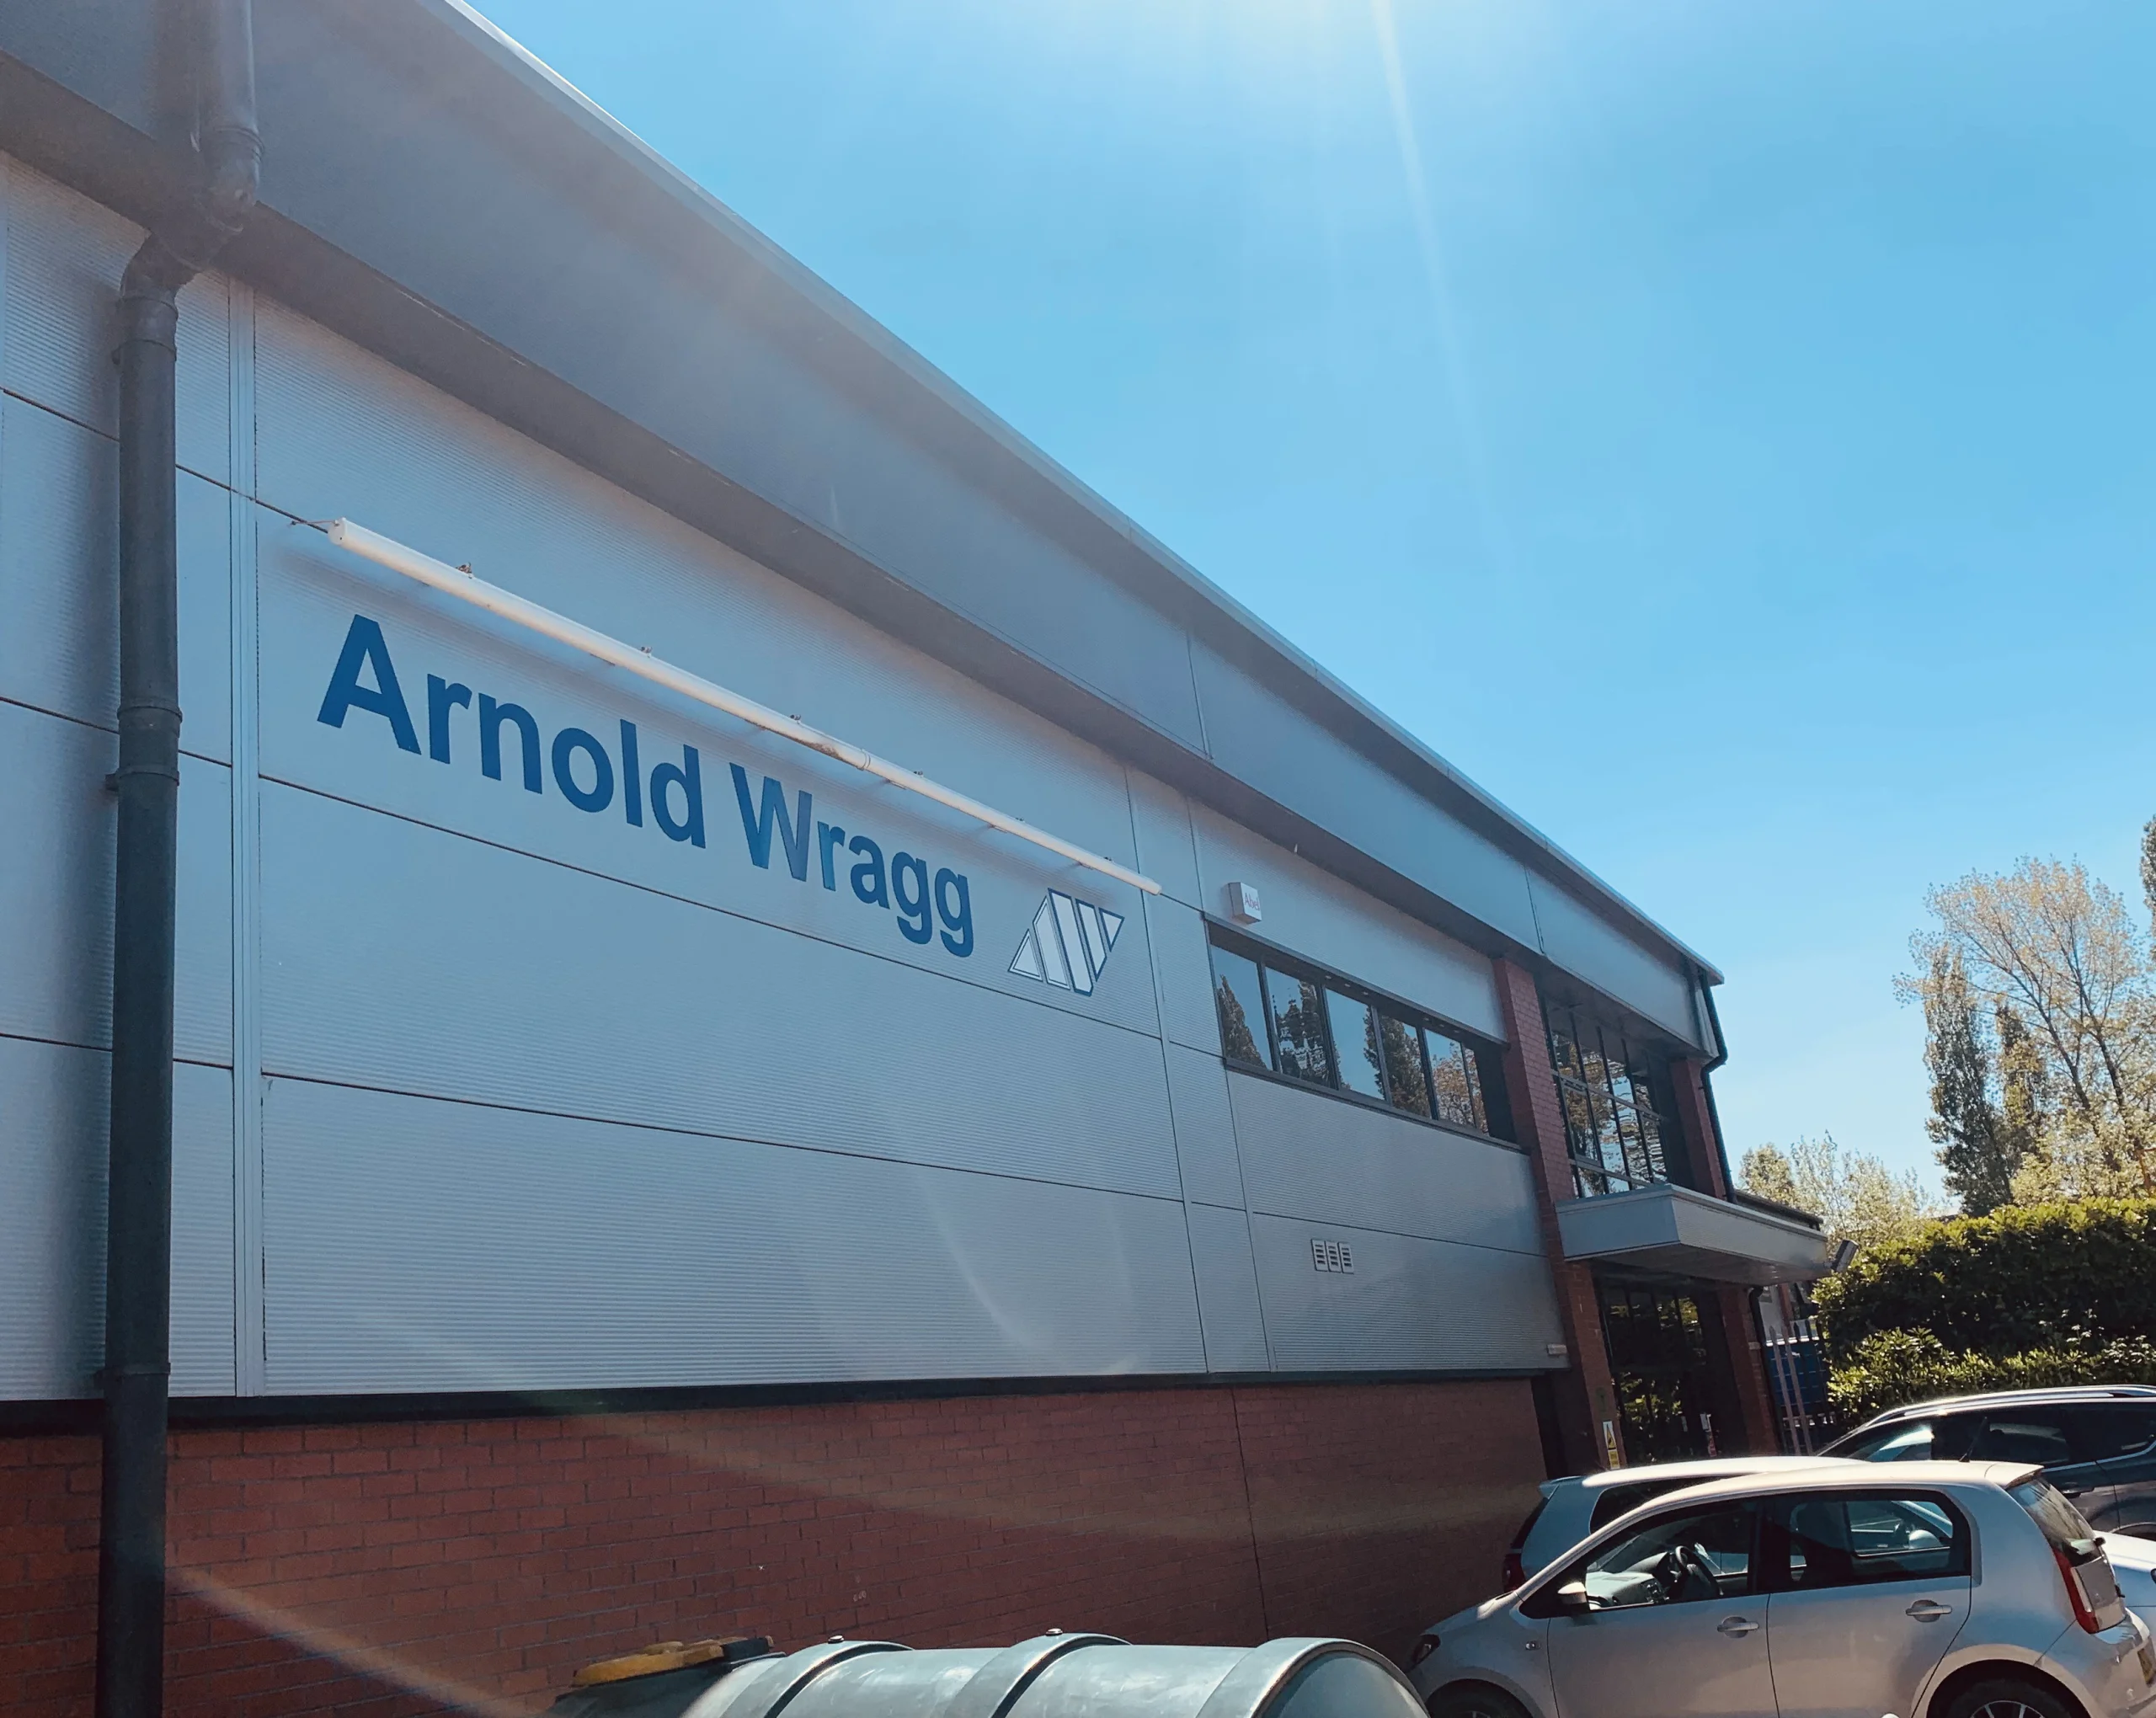 Arnold Wragg Ltd